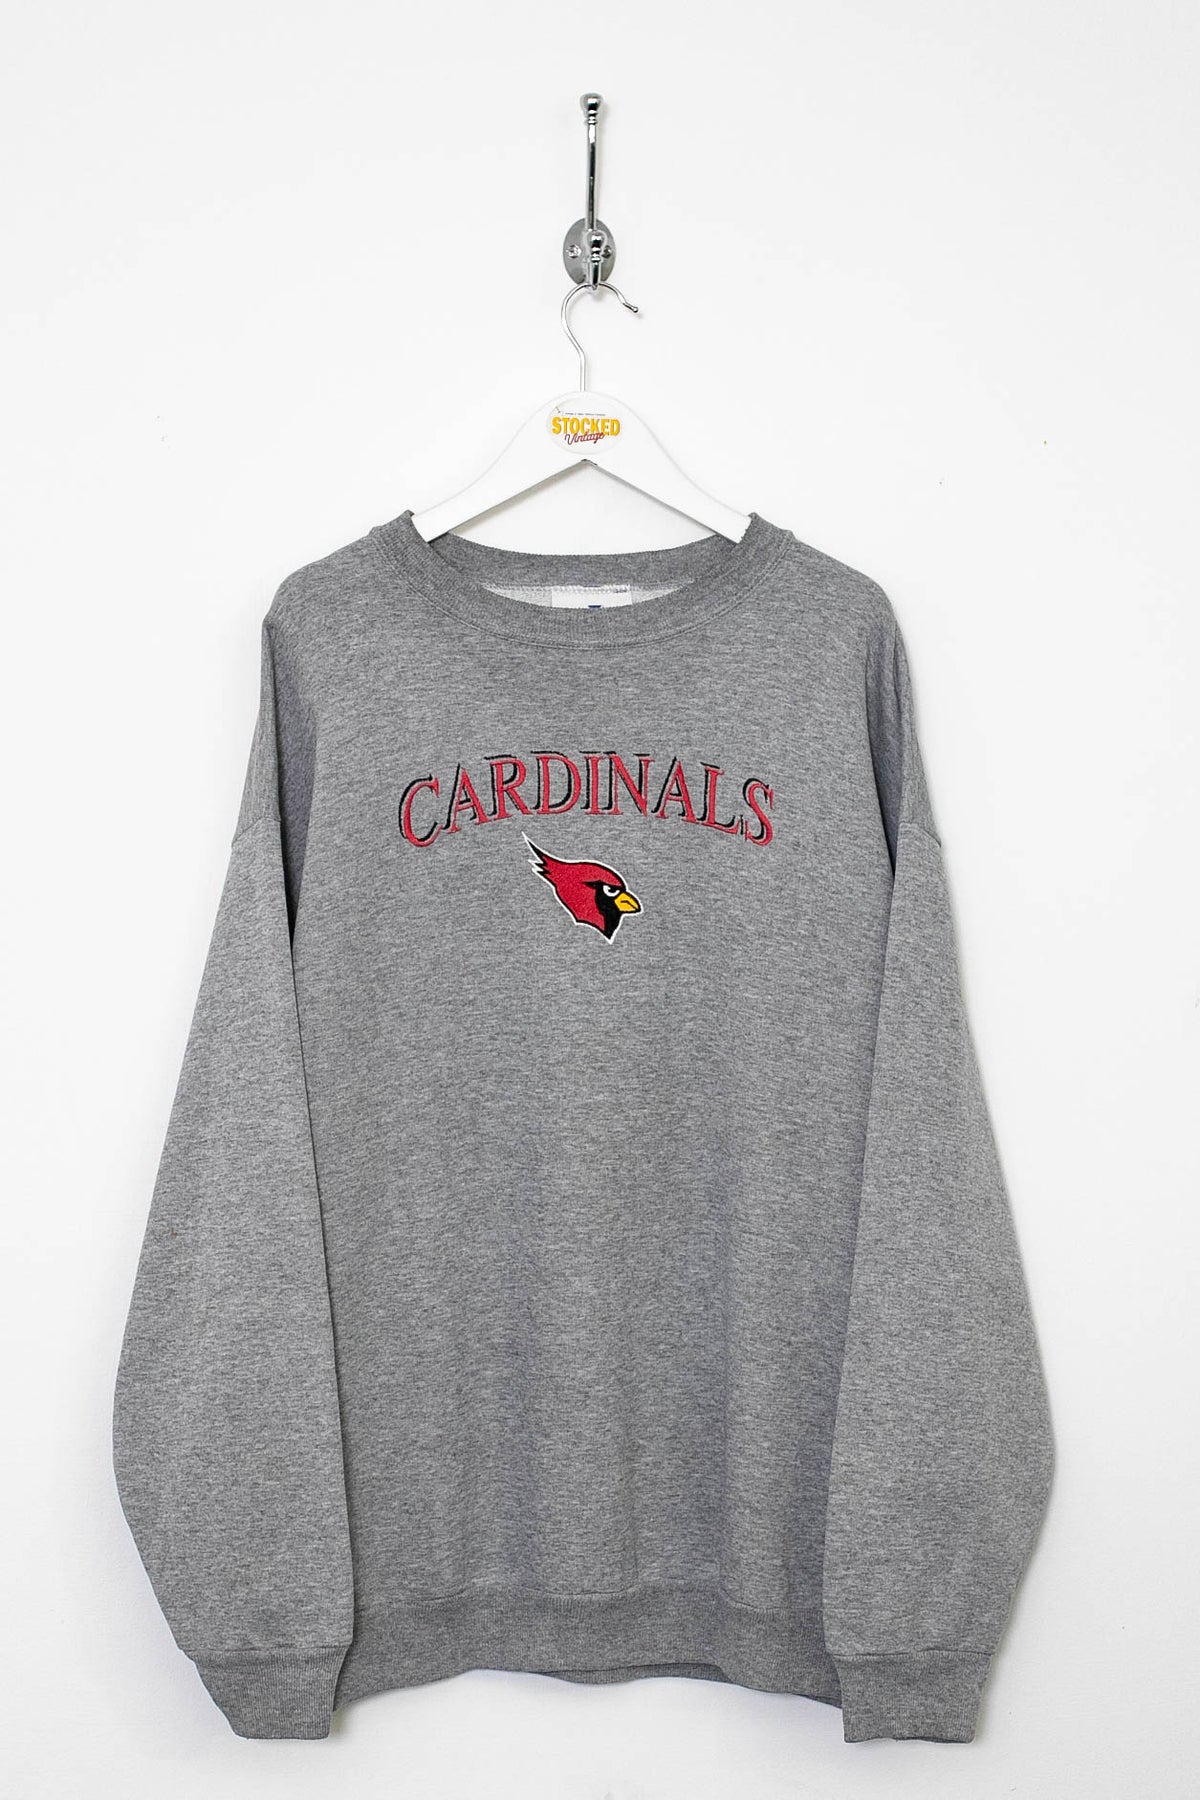 90s MLB St. Louis Cardinals Sweatshirt (L)